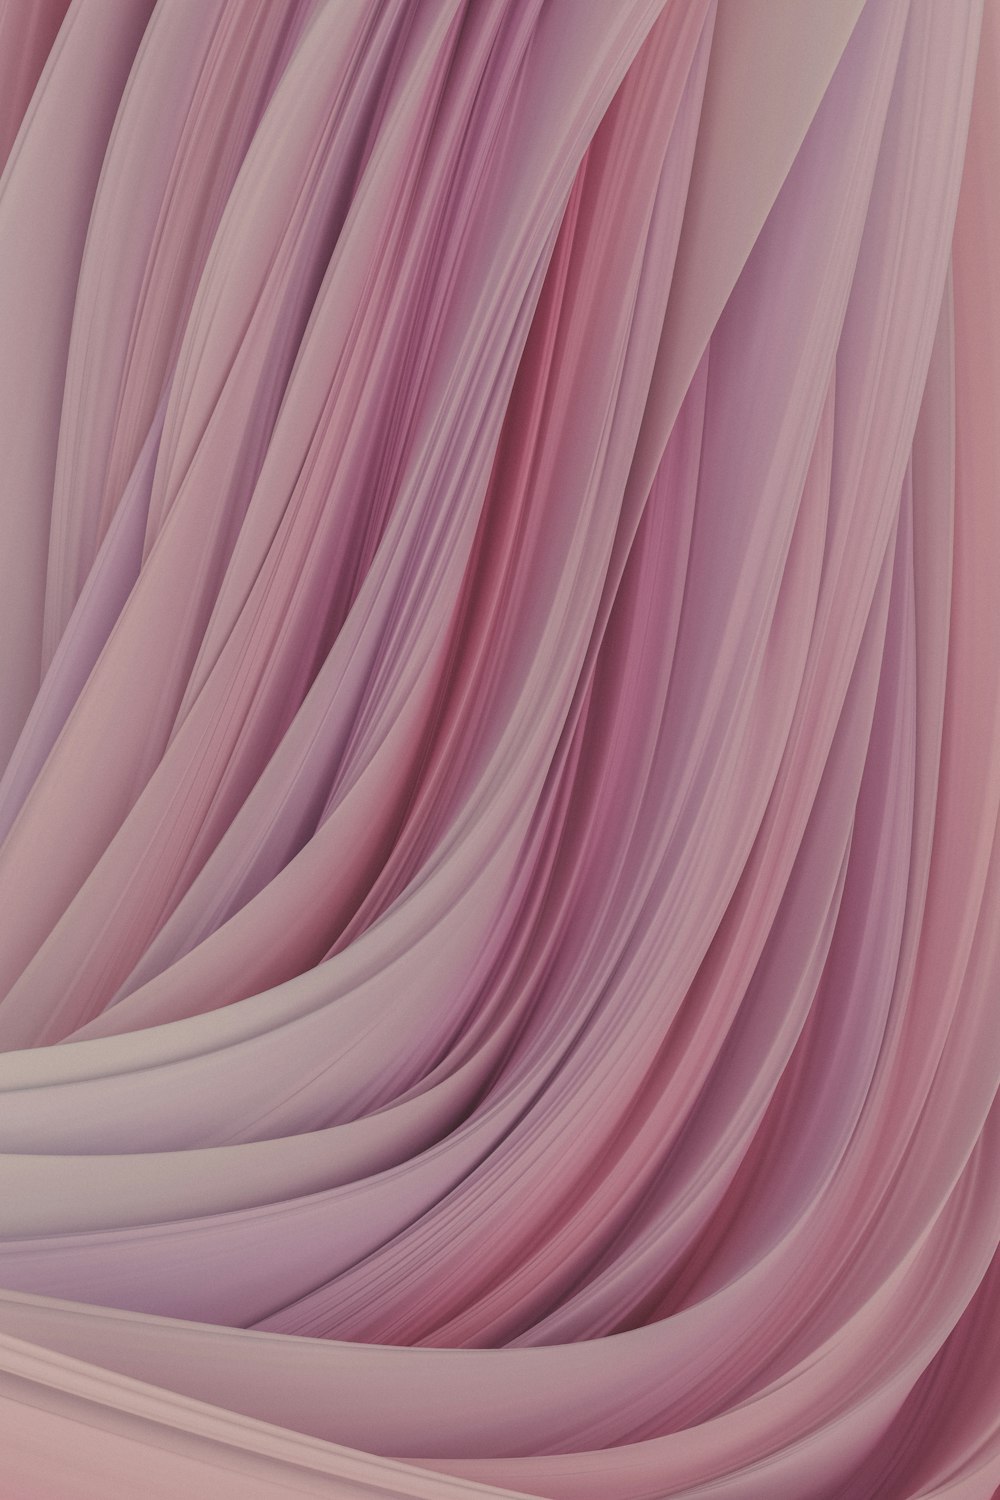 Gros plan d’un rideau rose